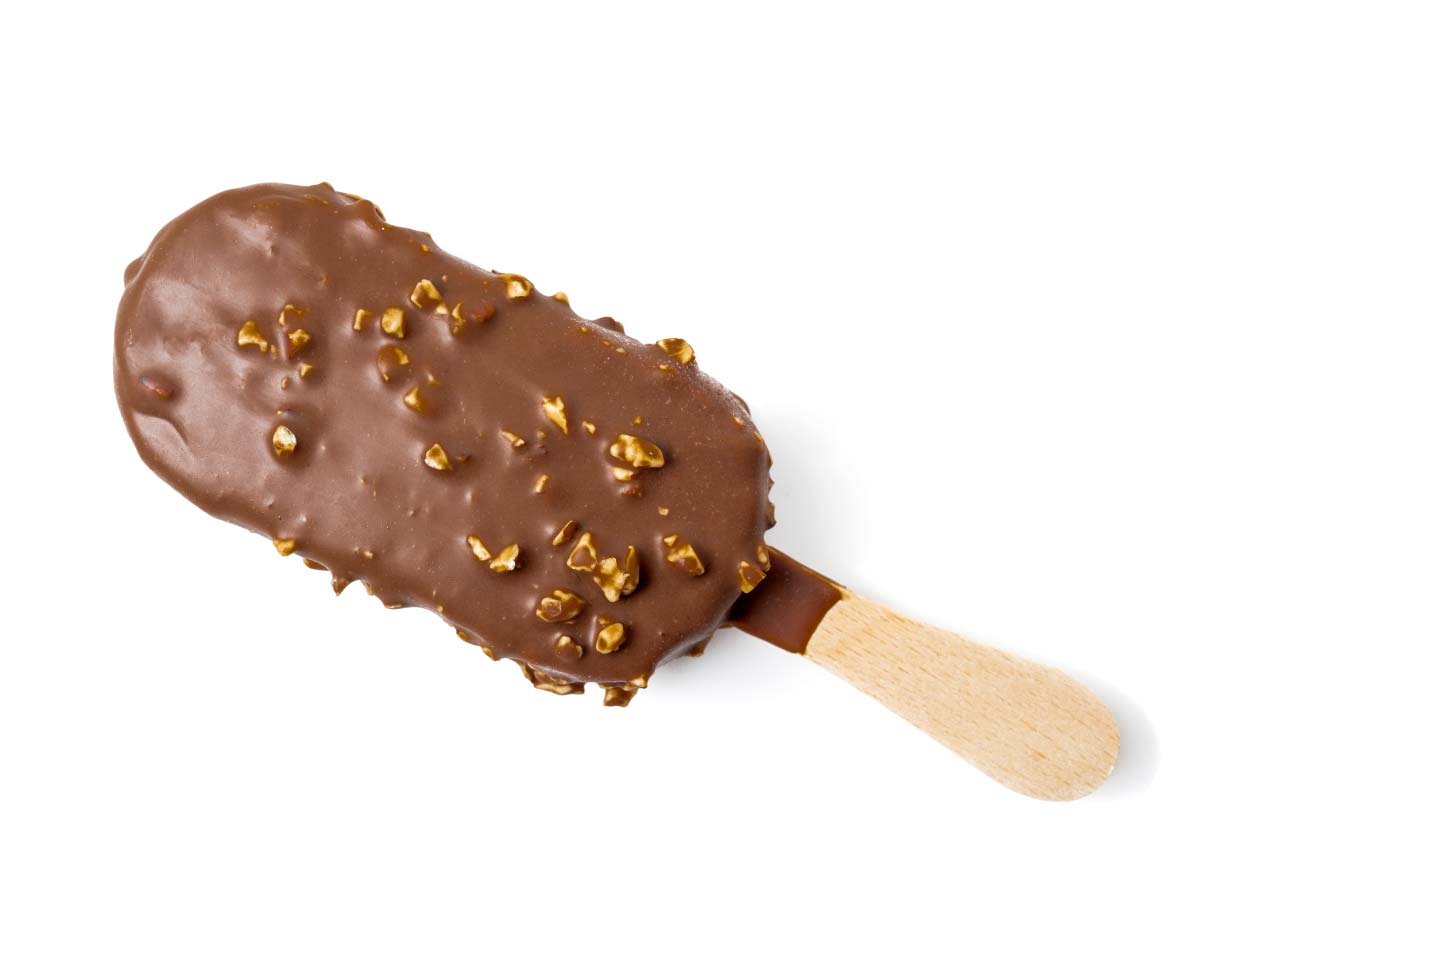 Chocolate almond ice cream bar